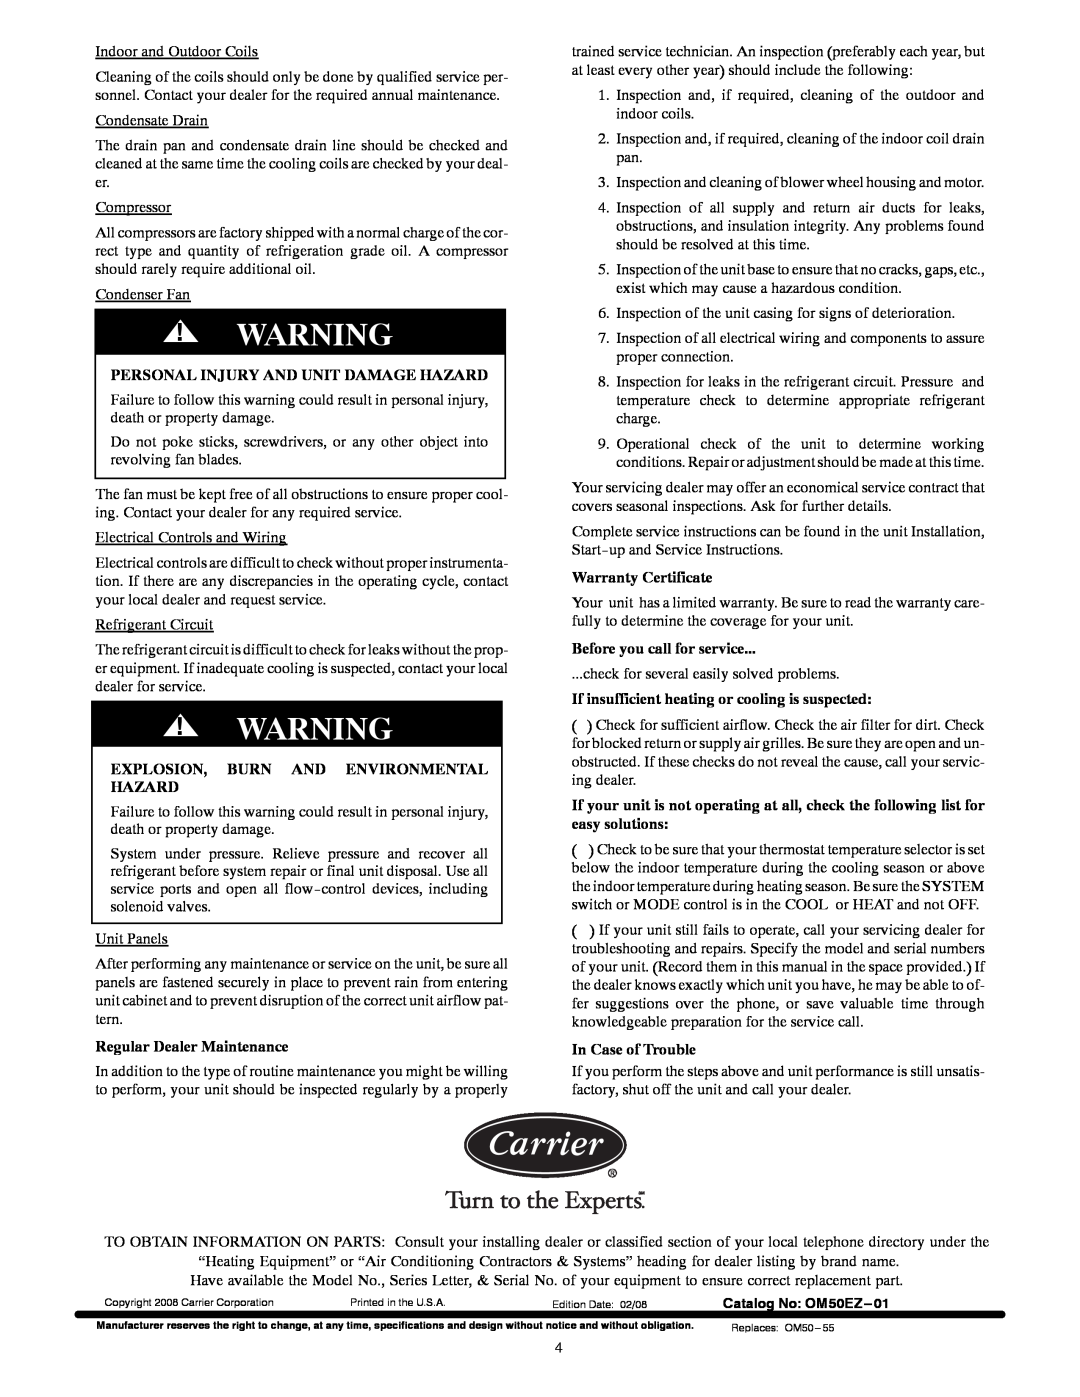 Carrier 50EZ Personal Injury And Unit Damage Hazard, Explosion, Burn And Environmental Hazard, Regular Dealer Maintenance 